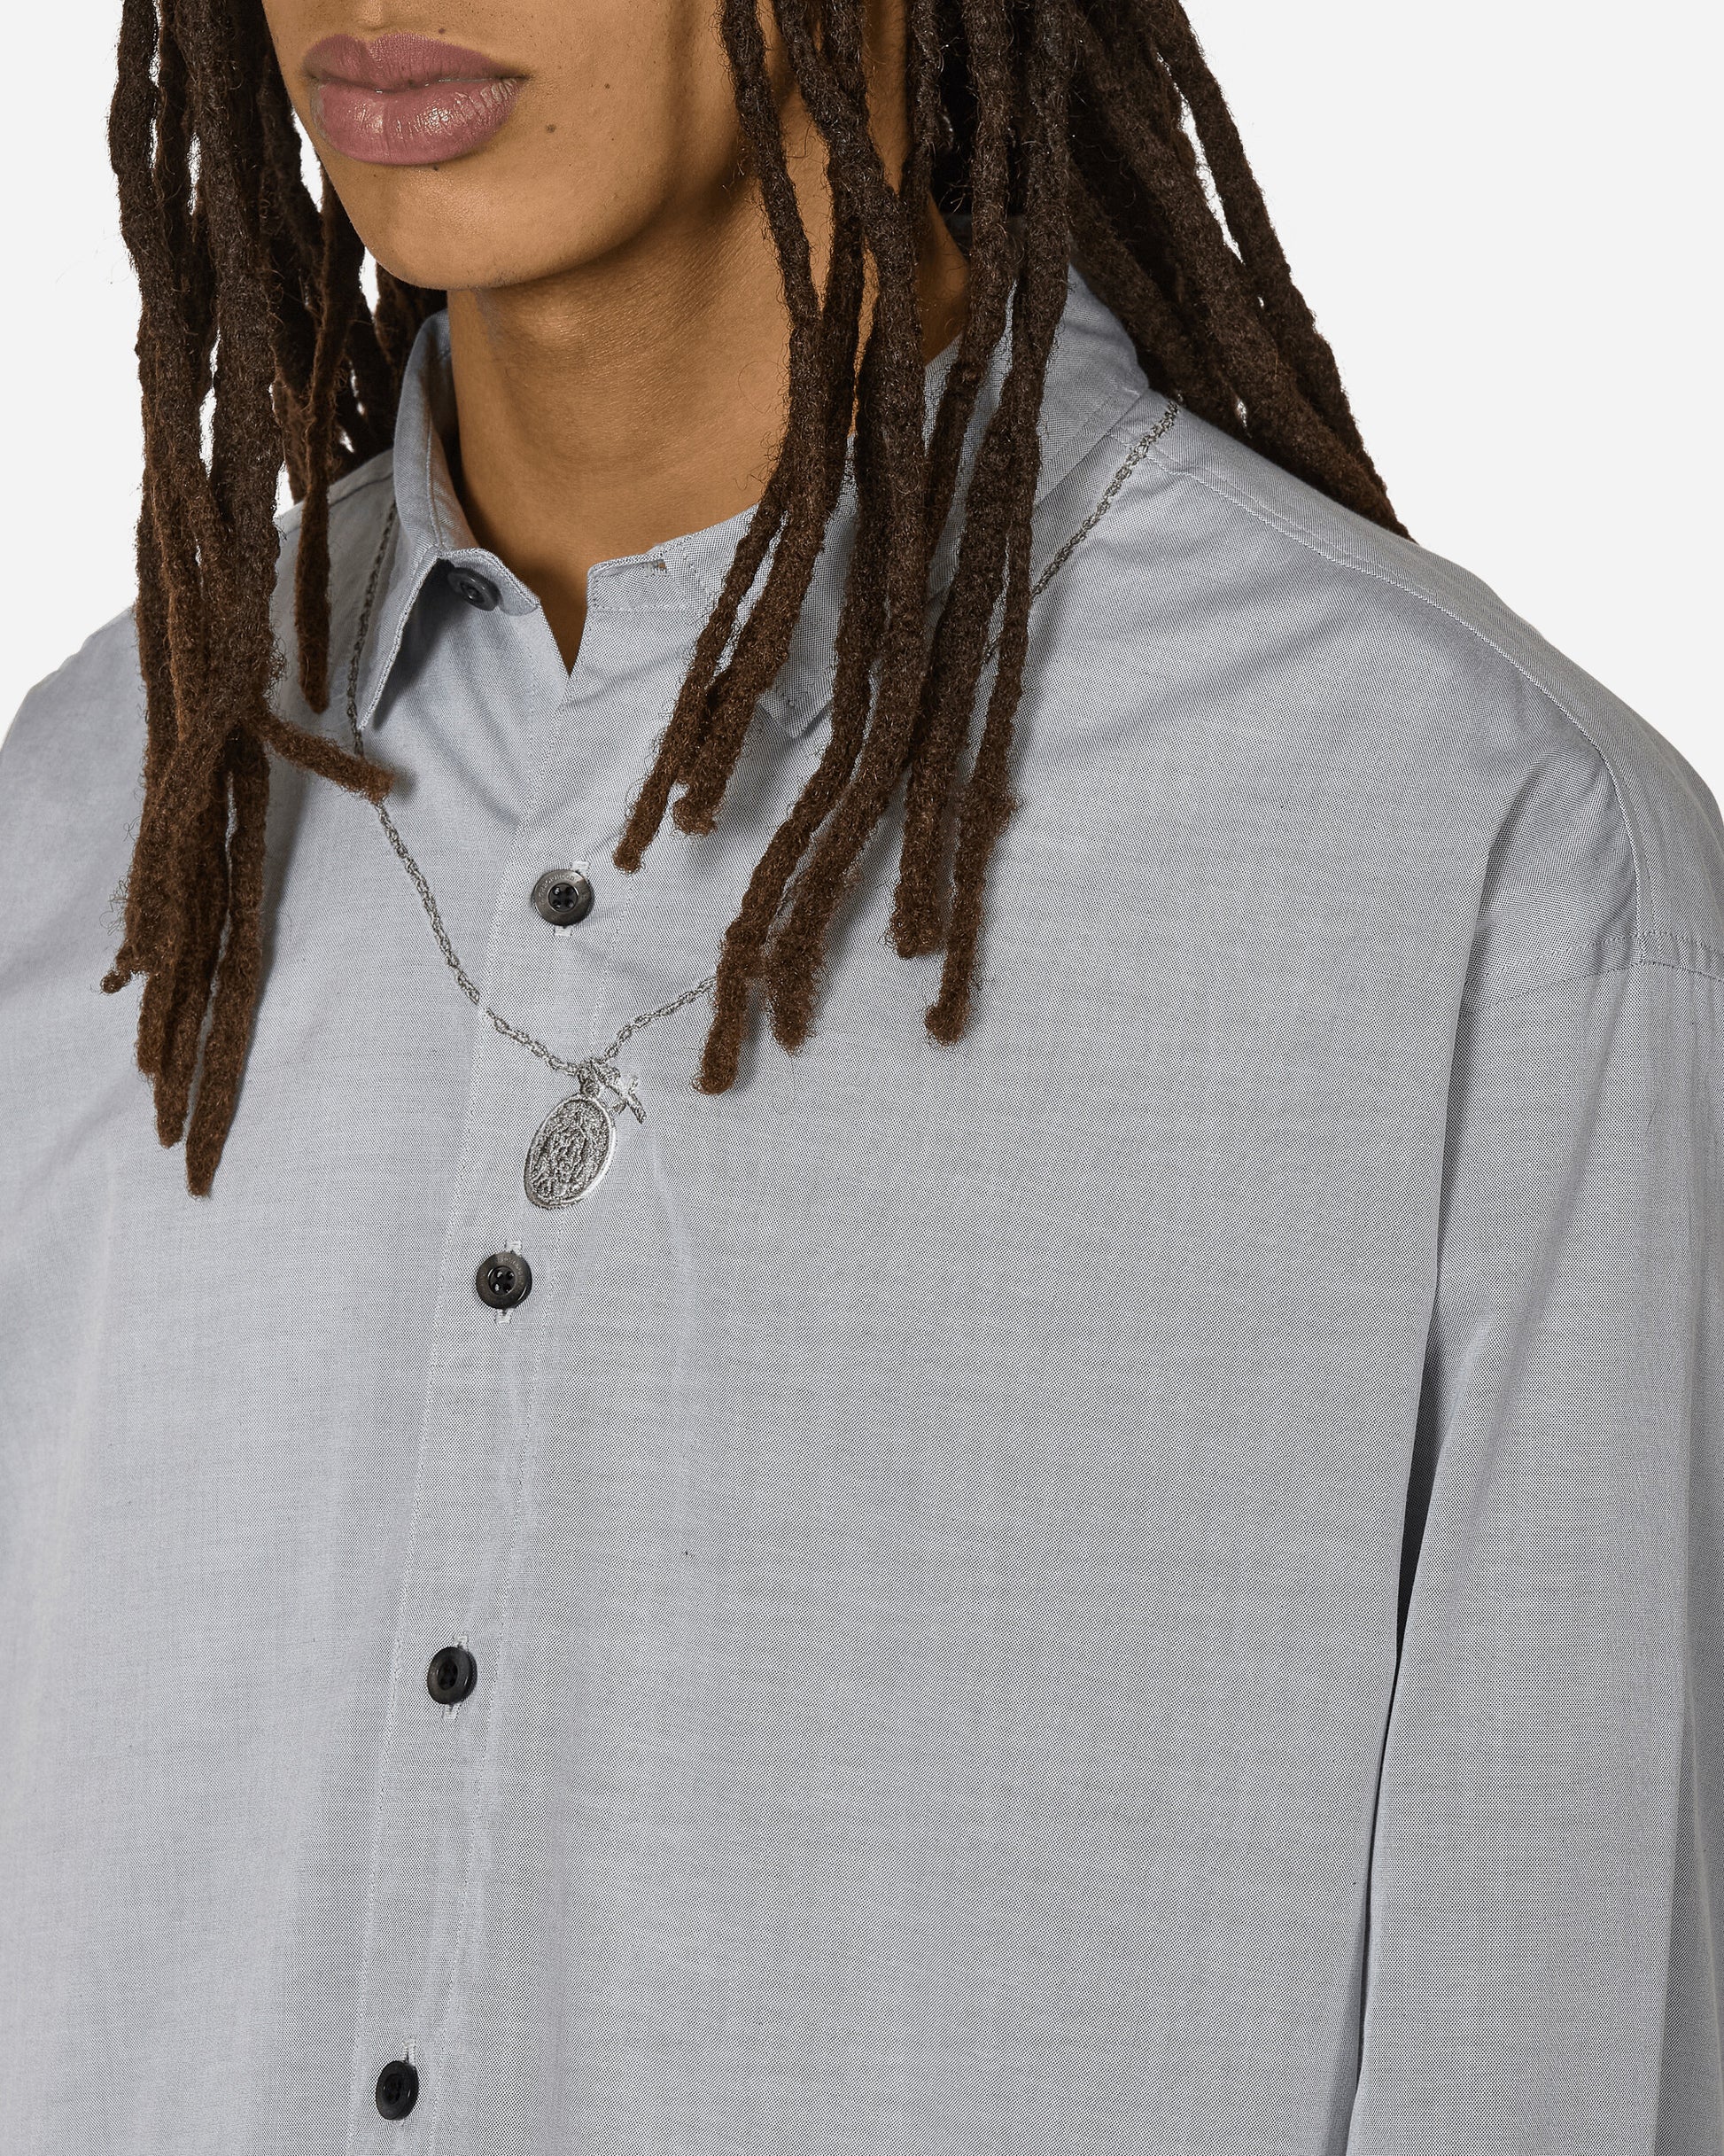 Neighborhood Medal & Cross Embroidery Shirt Ls Black Shirts Longsleeve Shirt 241AQNH-SHM01 BK